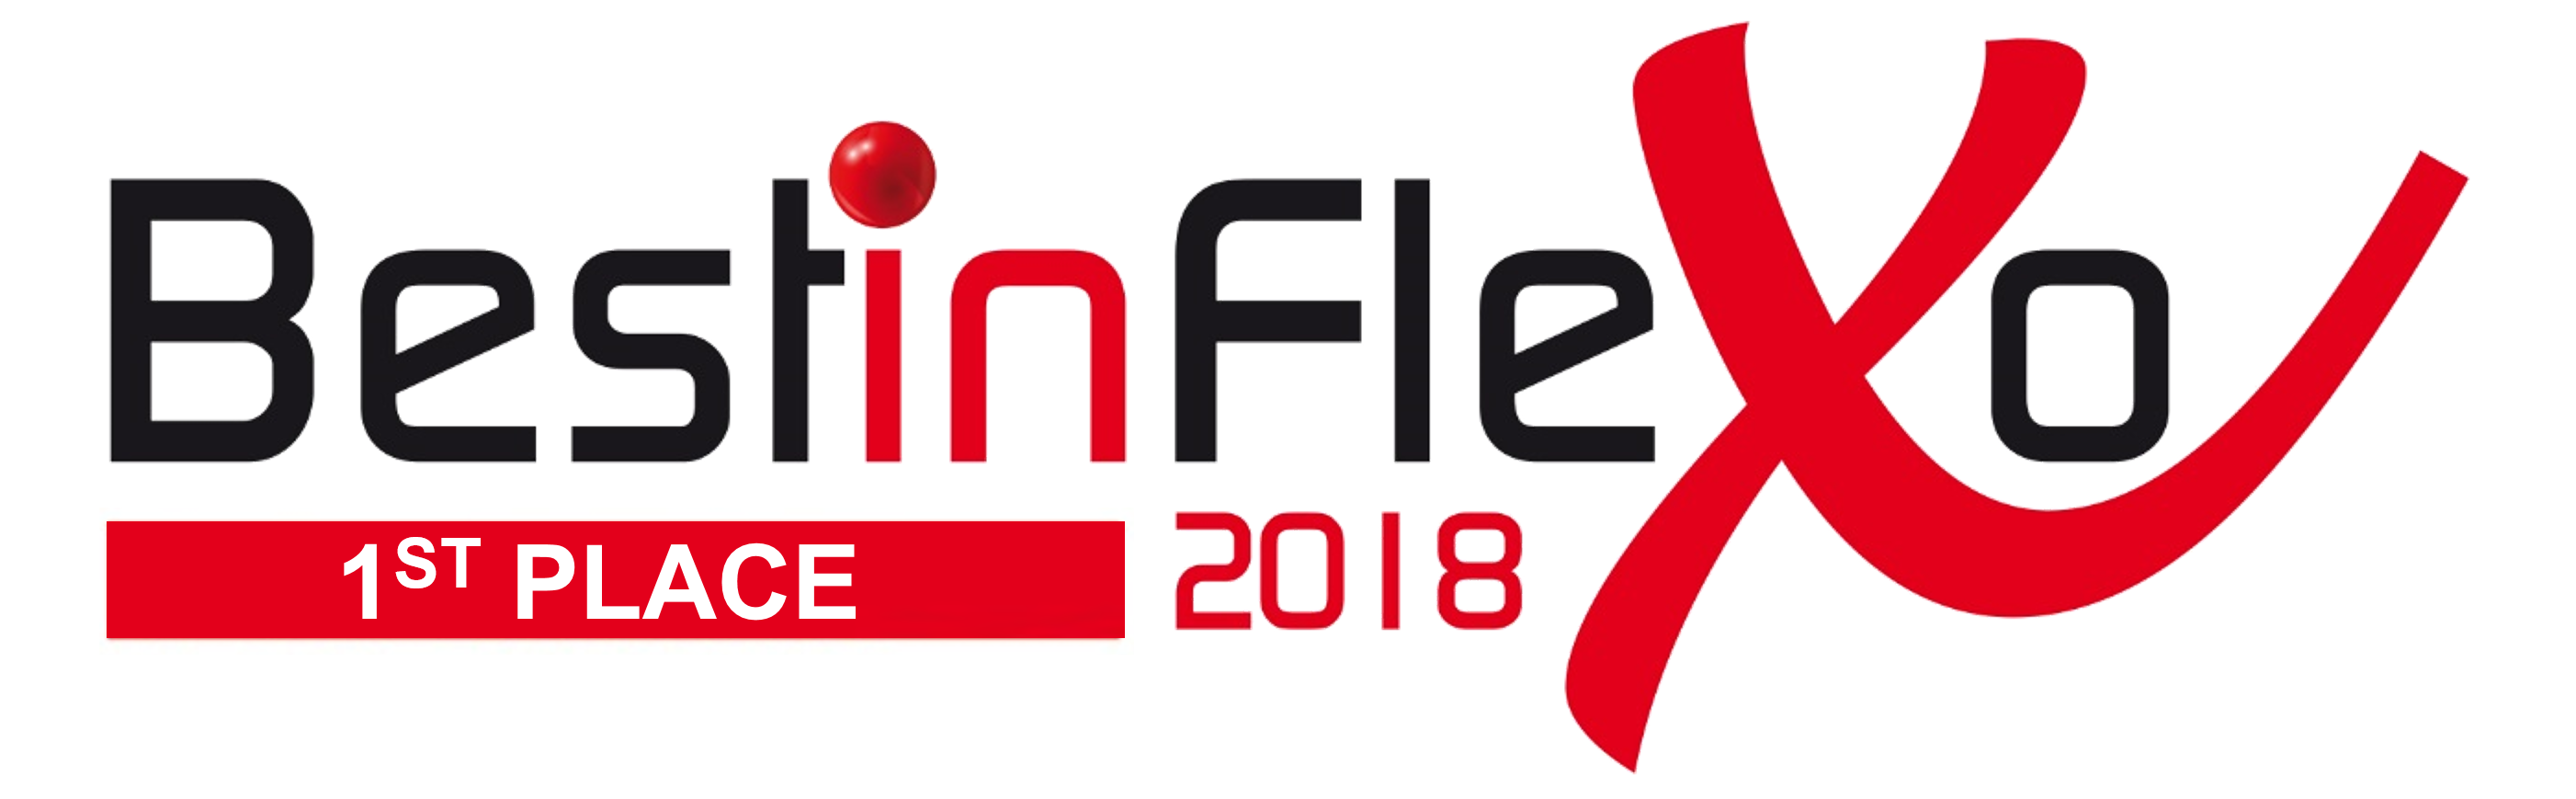 IPI vuelve a ganar: Premio BestInFlexo 2018 a la calidad de la impresión flexográfica